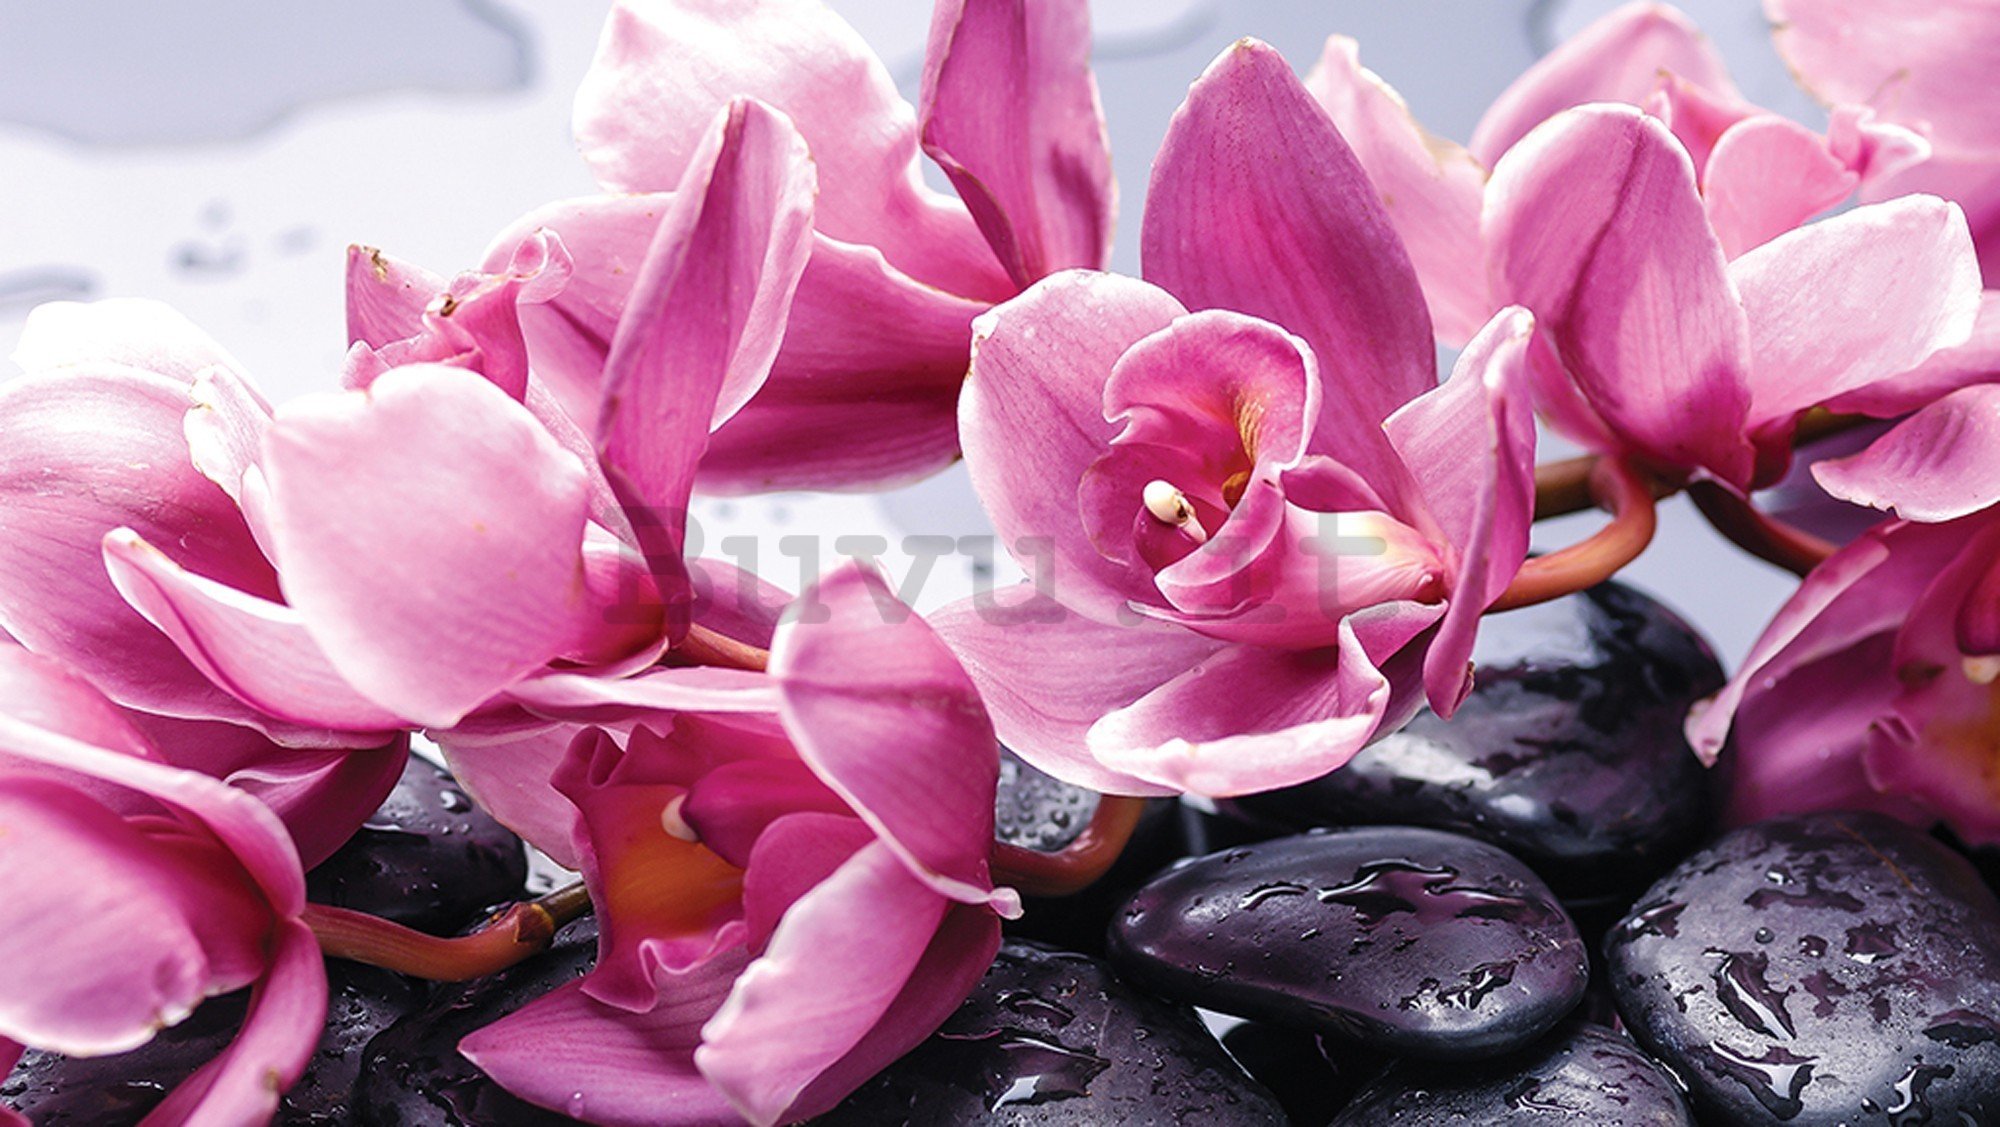 Fotomurale in TNT: Pietre termali e orchidee rosa - 416x254 cm